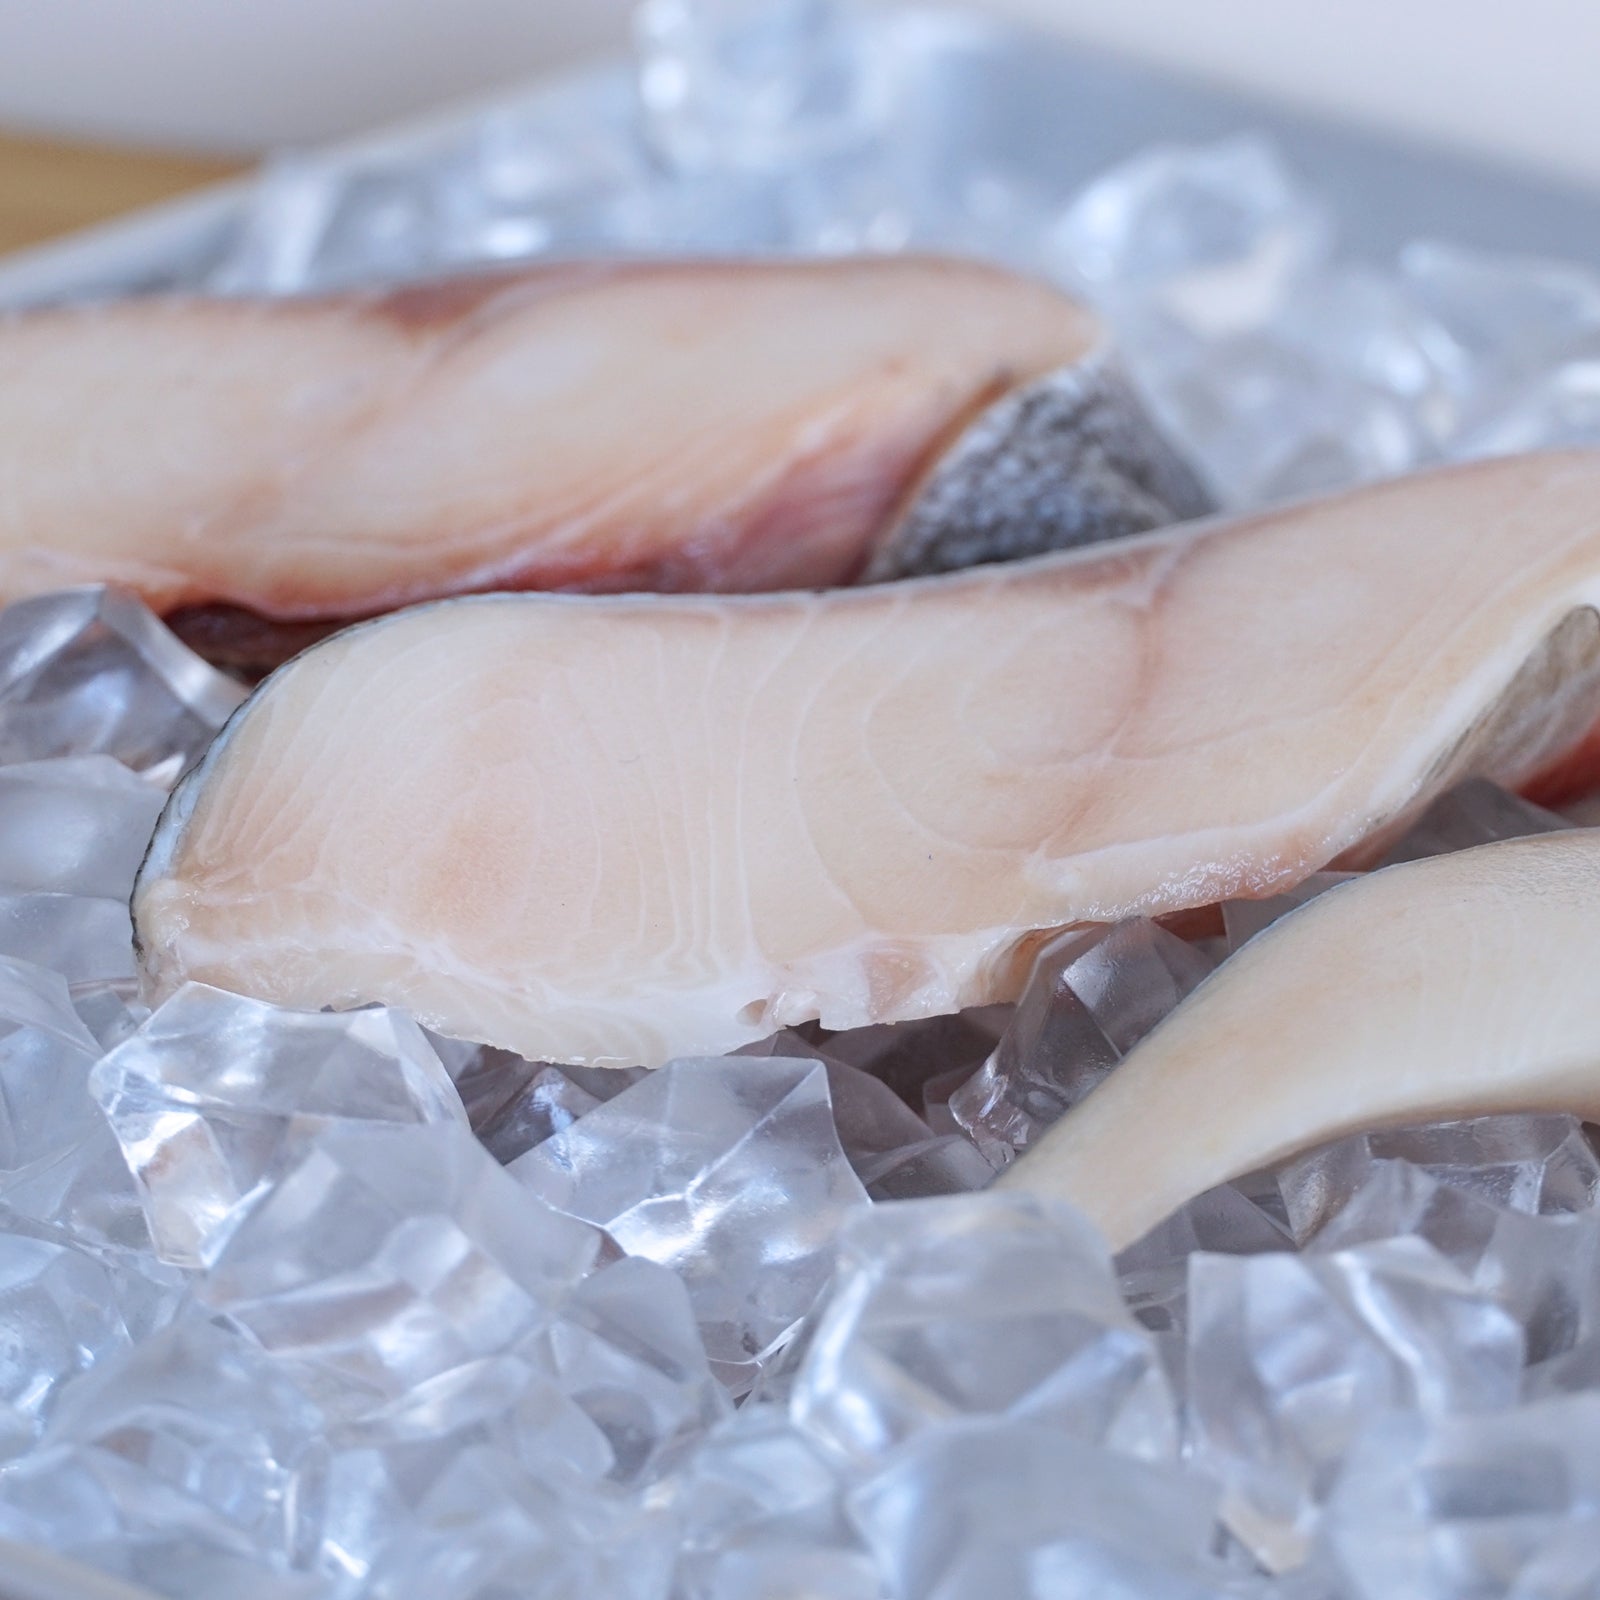 Wild-Caught Sablefish / Black Cod Fillets from Alaska (500g) - Horizon Farms